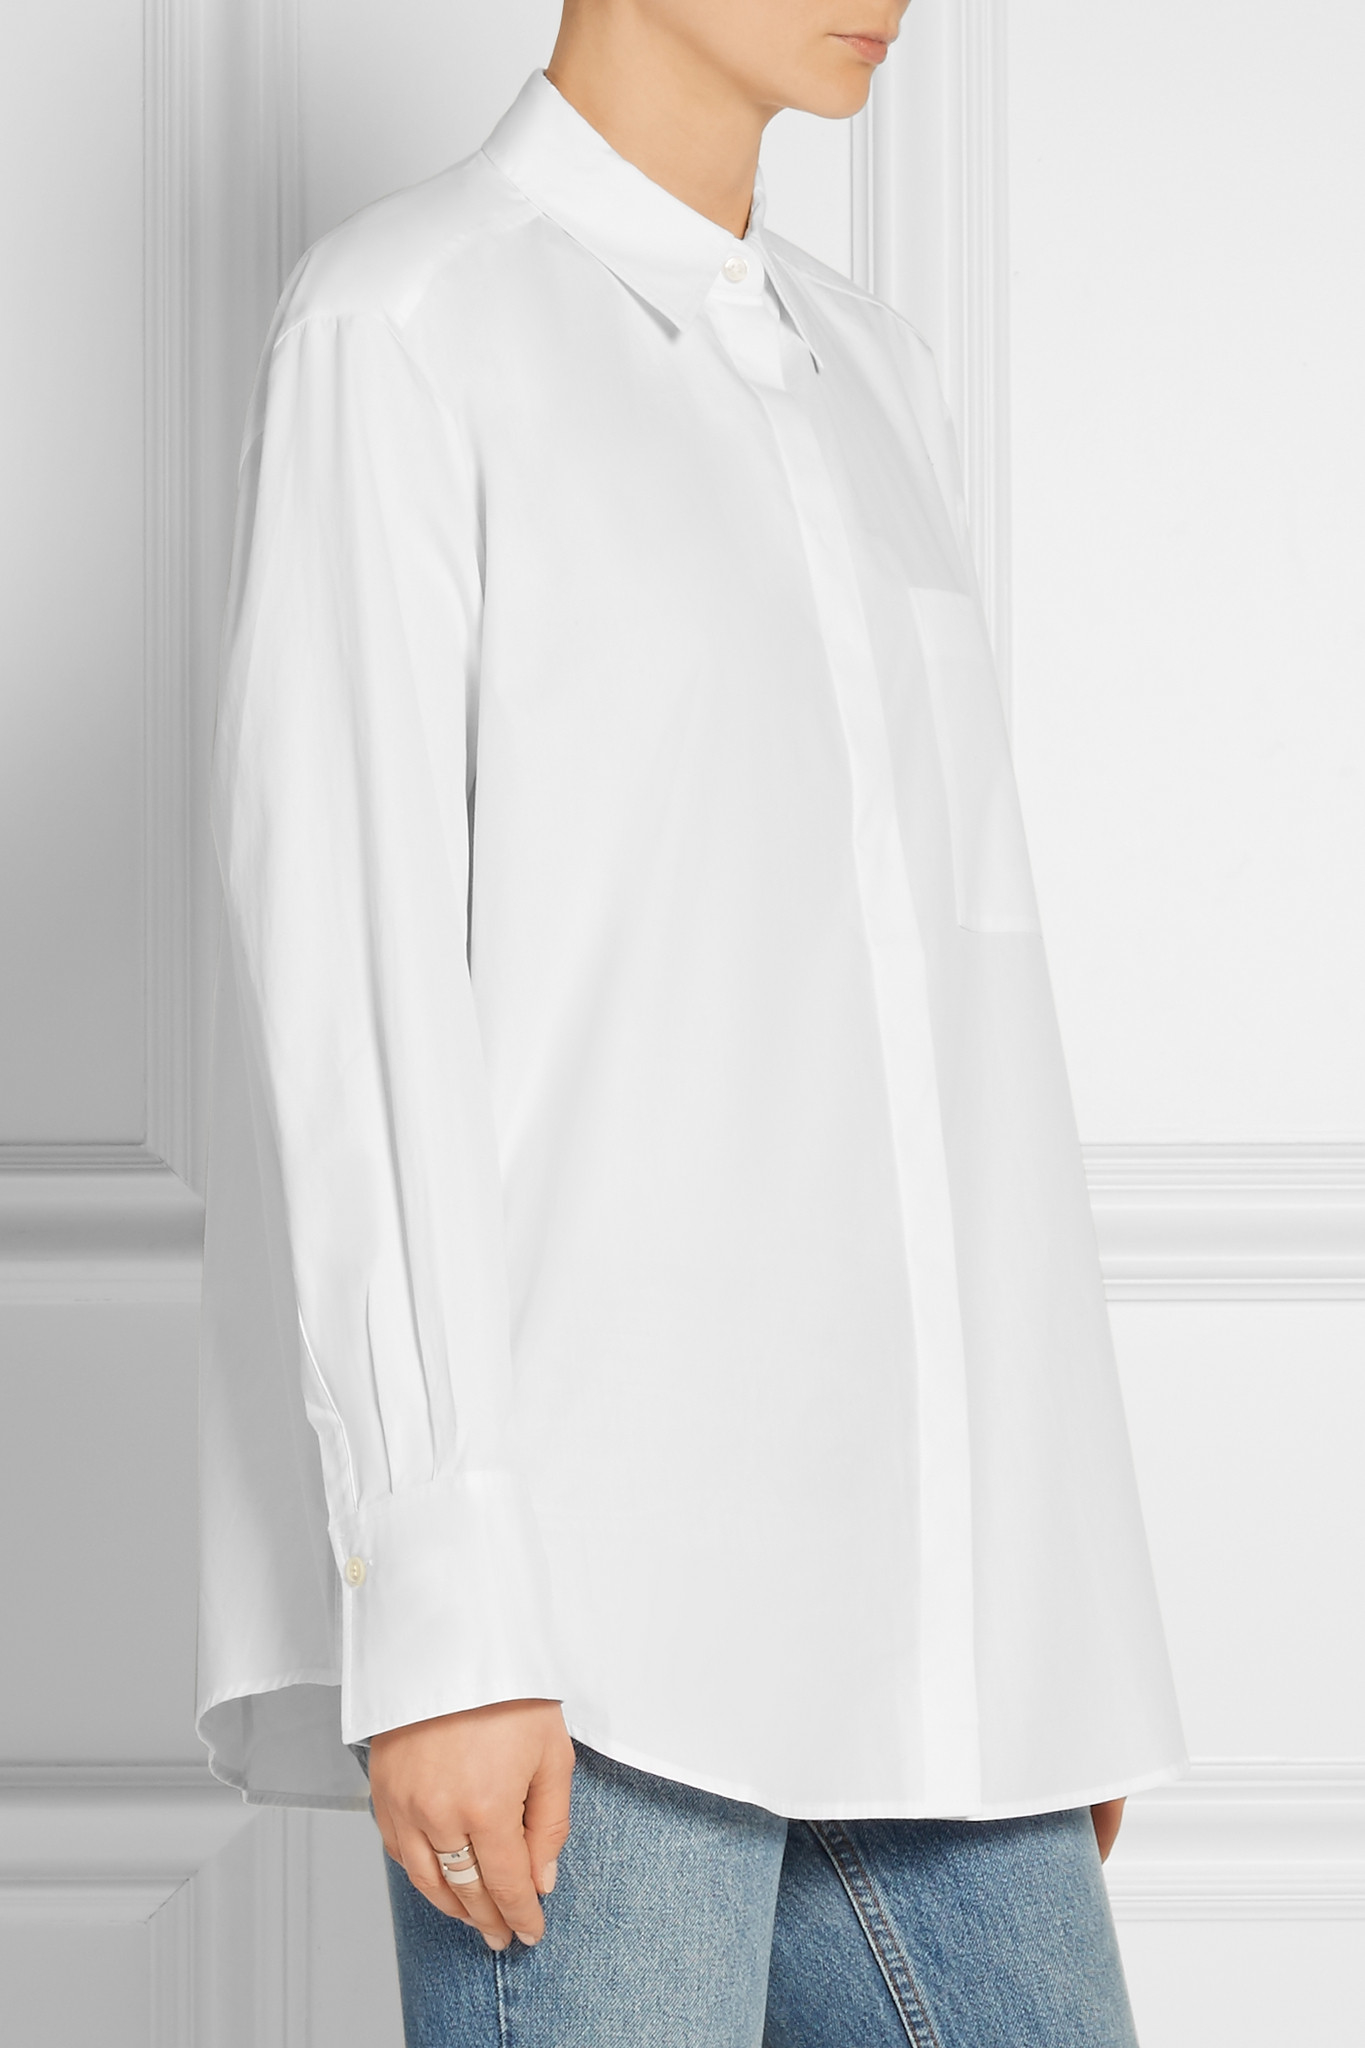 Acne Studios Addle Oversized Cotton-poplin Shirt in White - Lyst